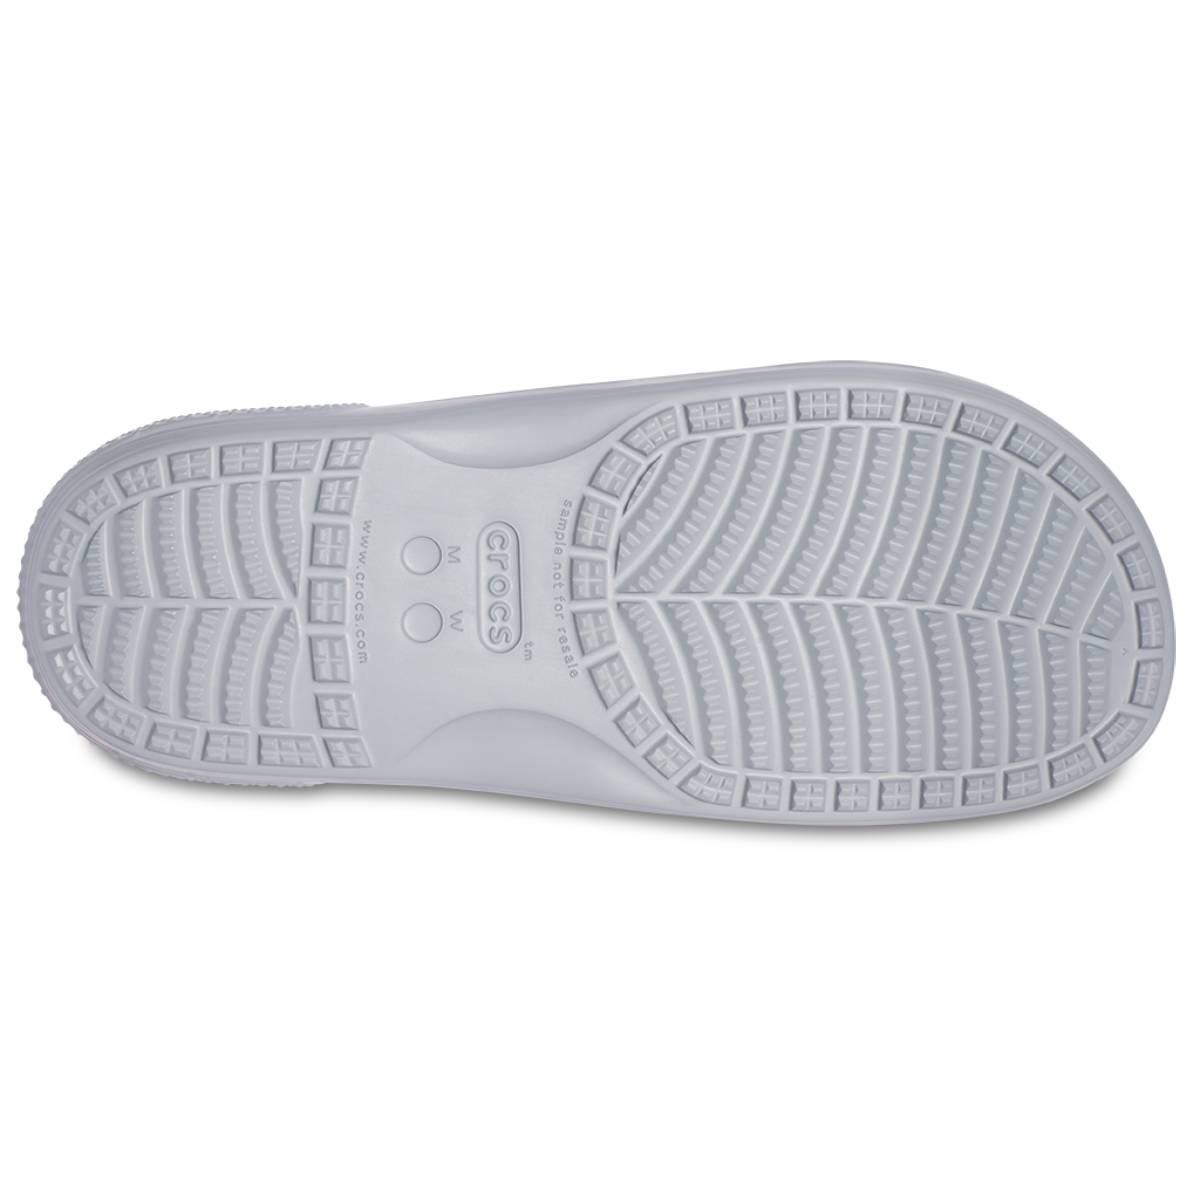  Crocs Classic Crocs Sandal Terlik CR206761-007